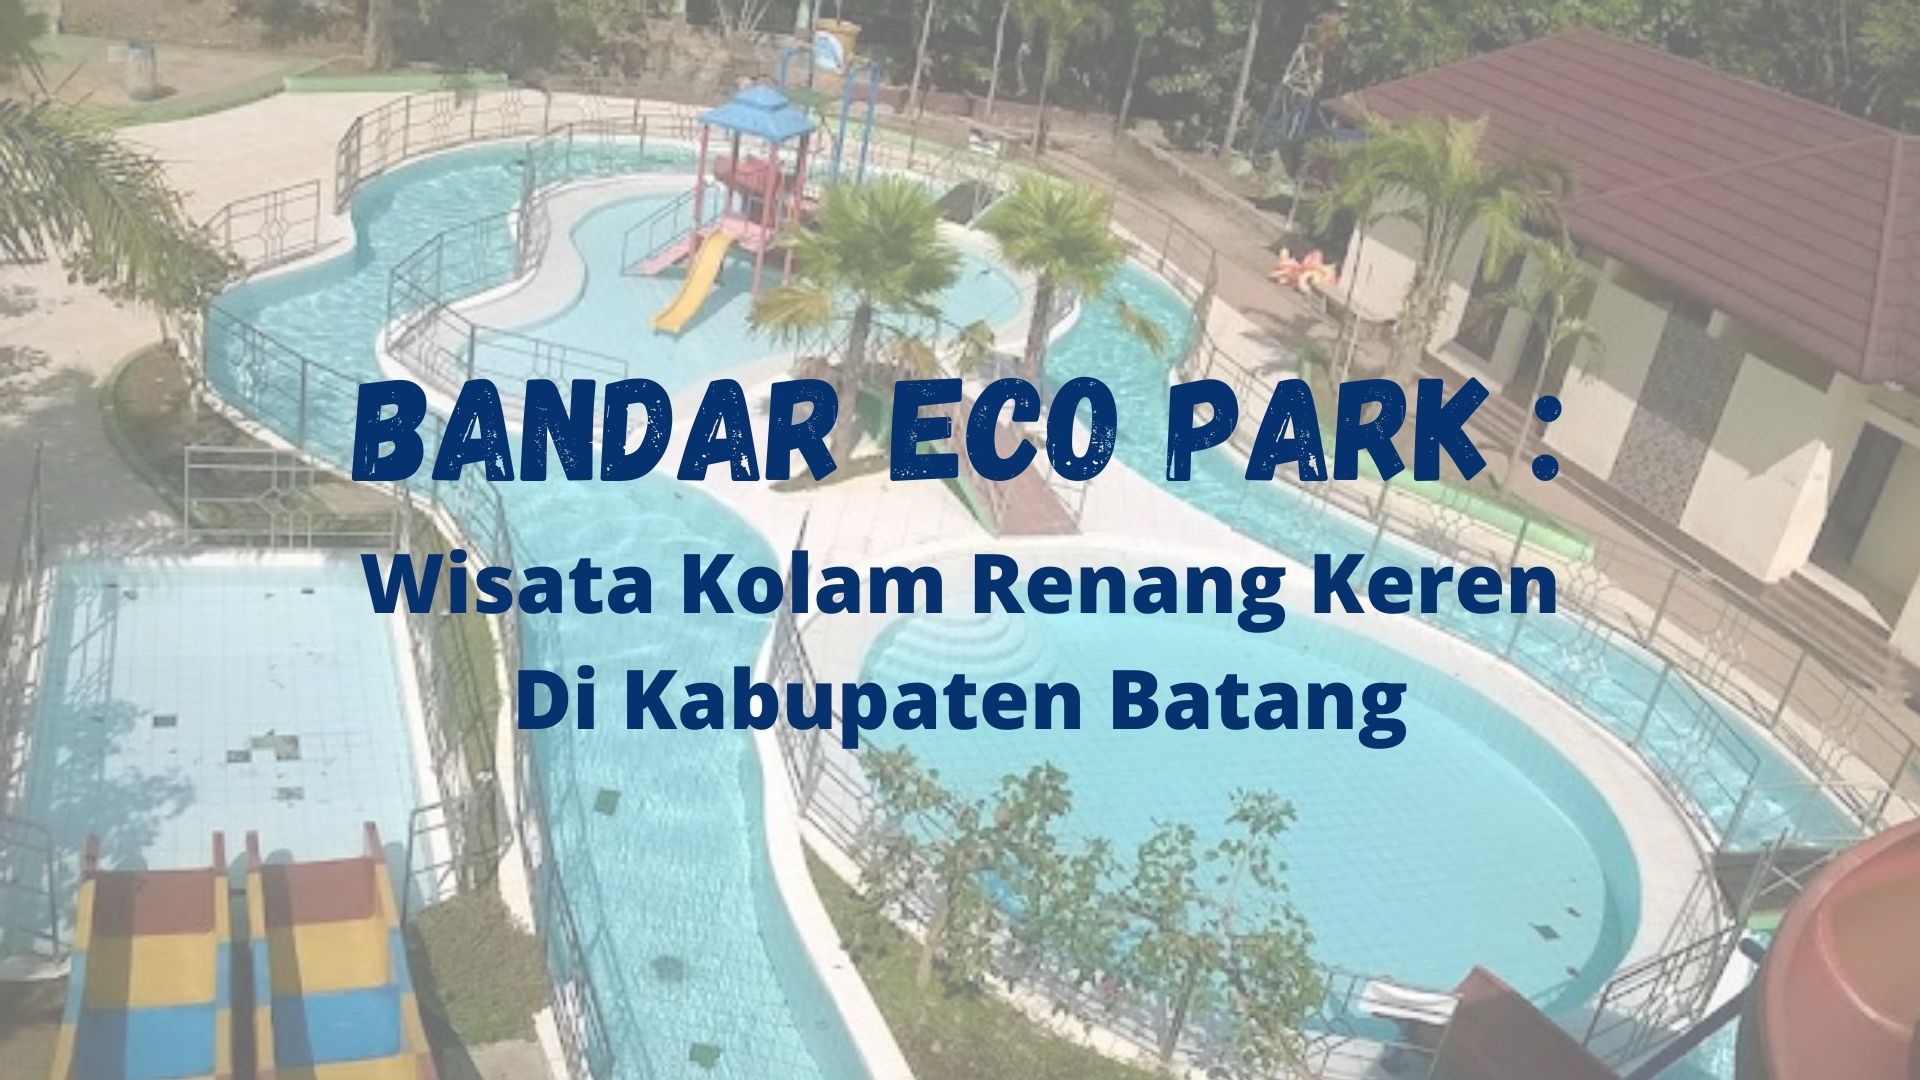 You are currently viewing Bandar Eco Park : Wisata Kolam Renang Keren Di Kabupaten Batang